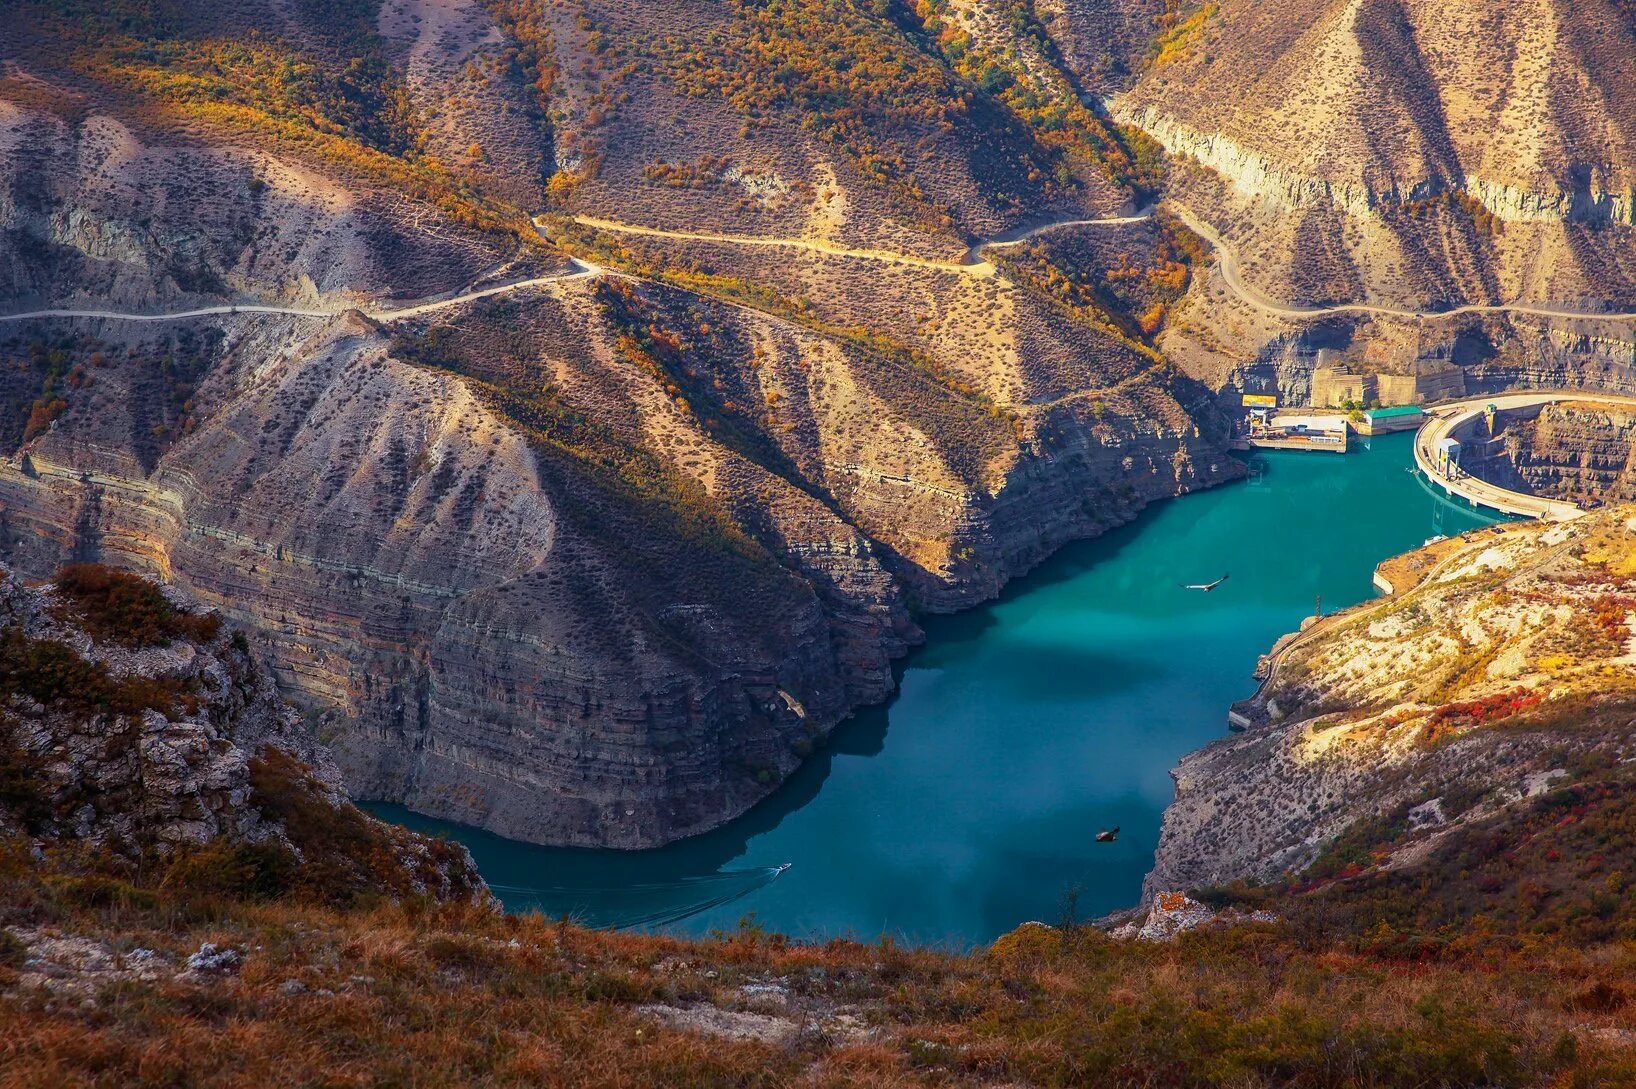 Дагестан каньон Сулакский каньон. Чиркейская ГЭС Сулакский каньон. Дубки Дагестан Сулакский каньон. Ущелье Дагестан Сулакский каньон. Каньон судакский